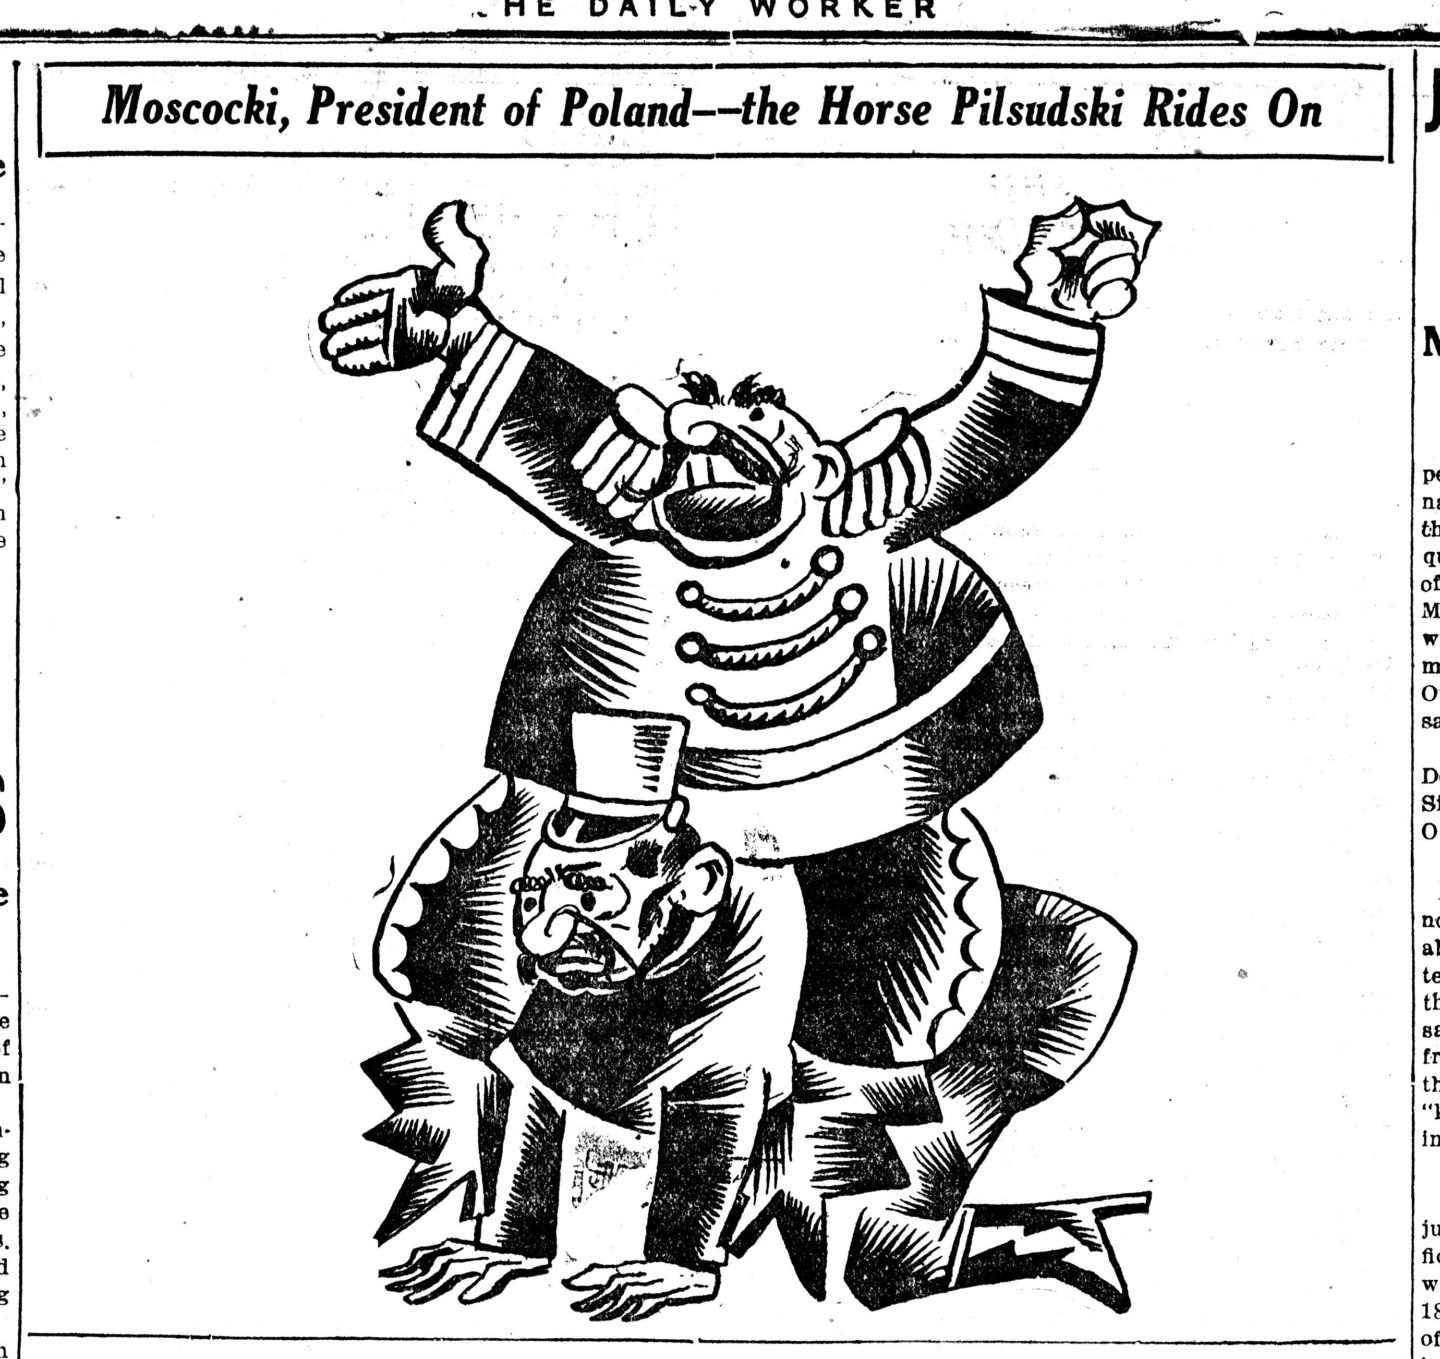 William Gropper, karykatura z pisma "Daily Worker", lata 20. XX wieku / caricature published in "Daily Worker", 1920's